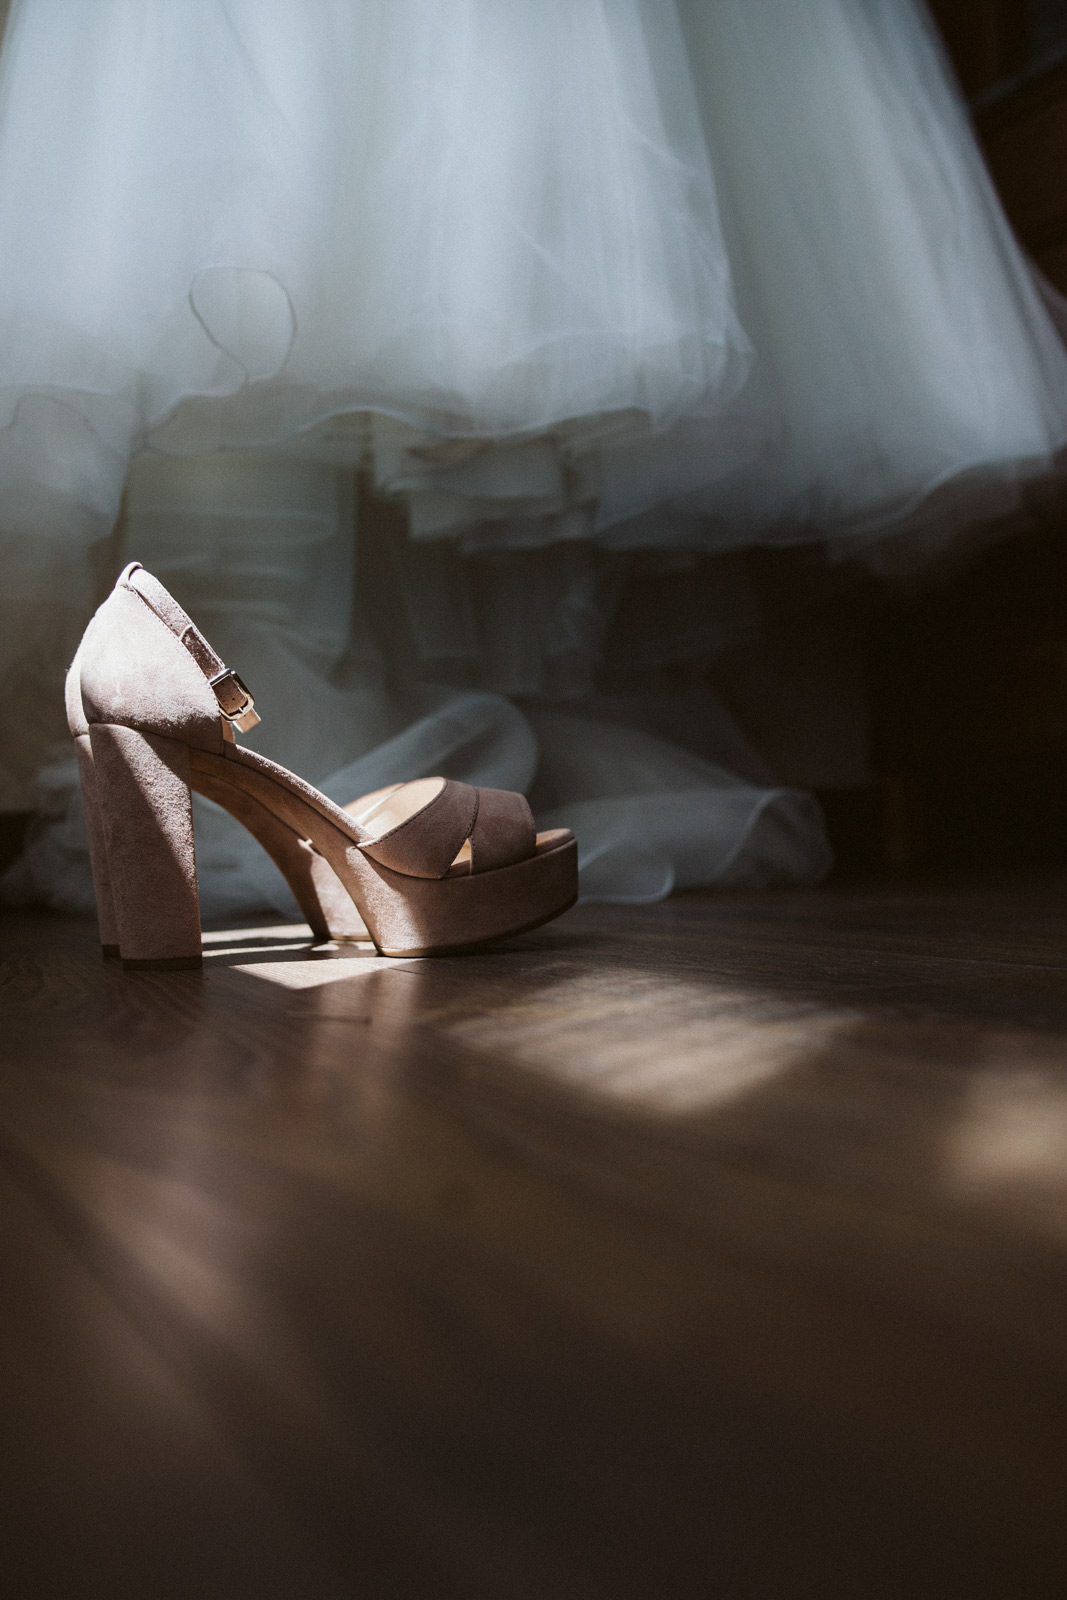 zapatos novia con rayo de luz, detalles